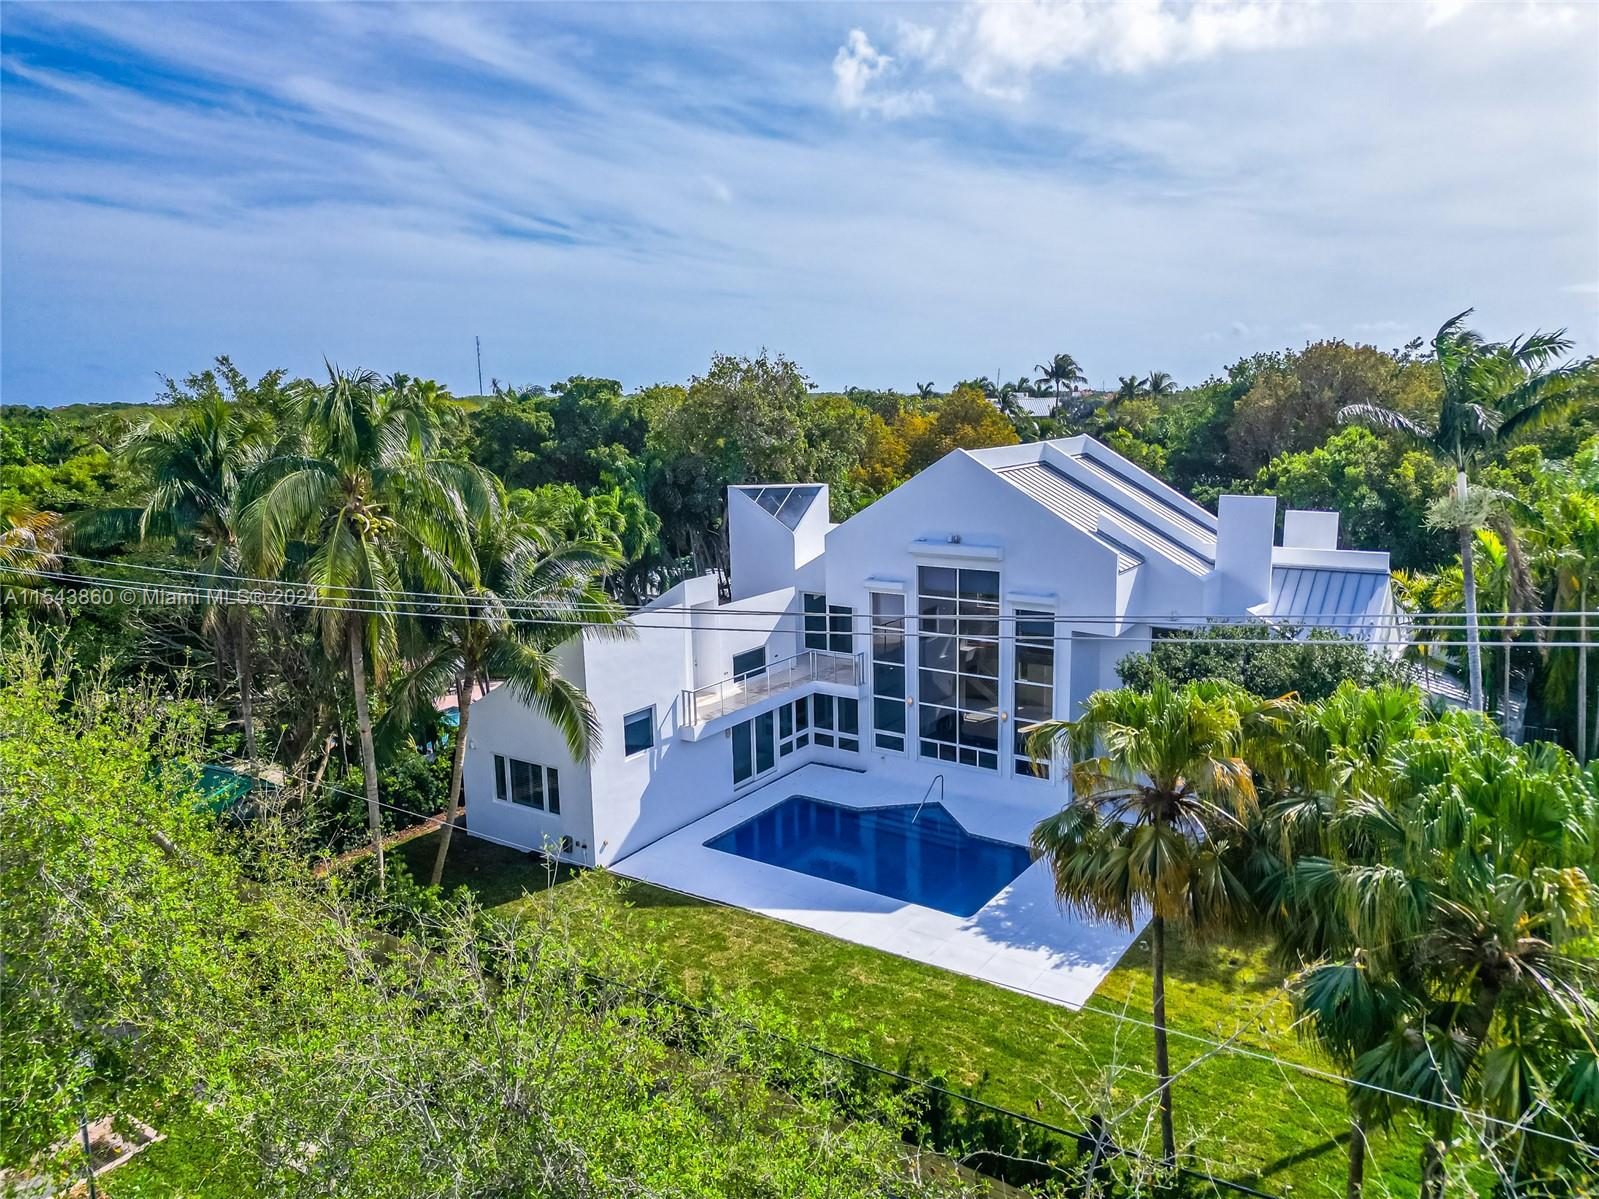 Rental Property at 51 Island Dr, Key Biscayne, Miami-Dade County, Florida - Bedrooms: 7 
Bathrooms: 8  - $30,000 MO.